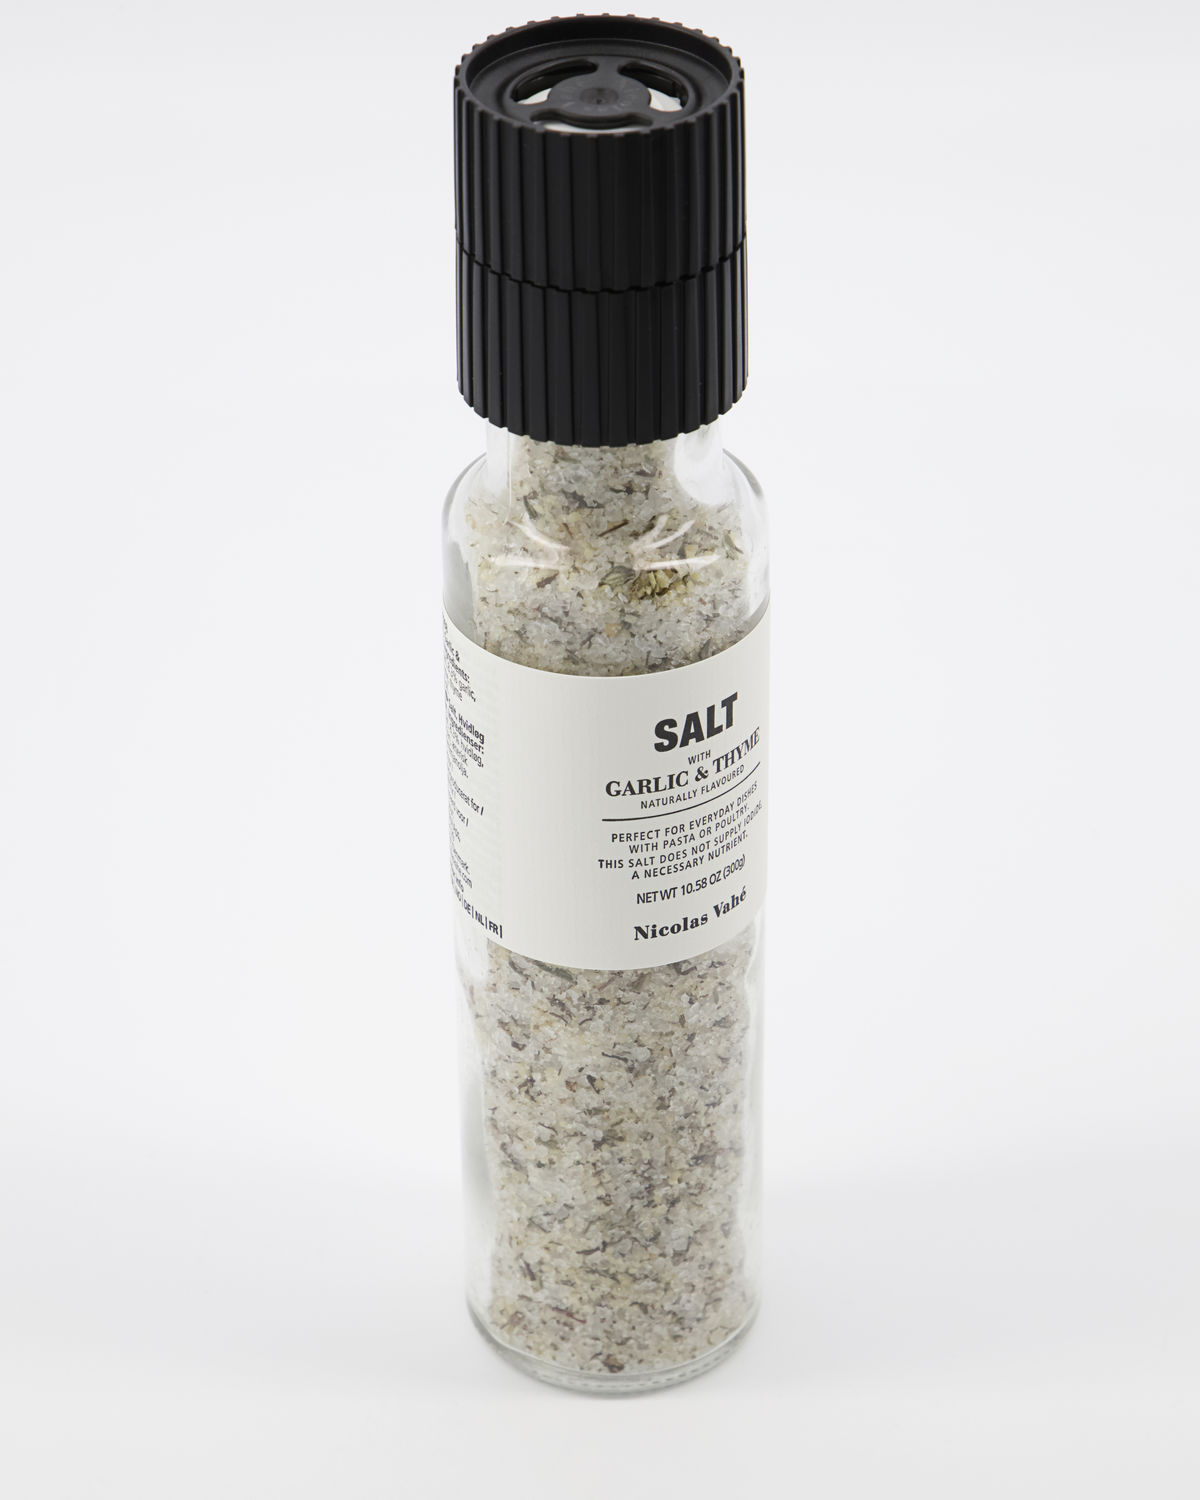 Salt, Garlic & Thyme, 300 g.